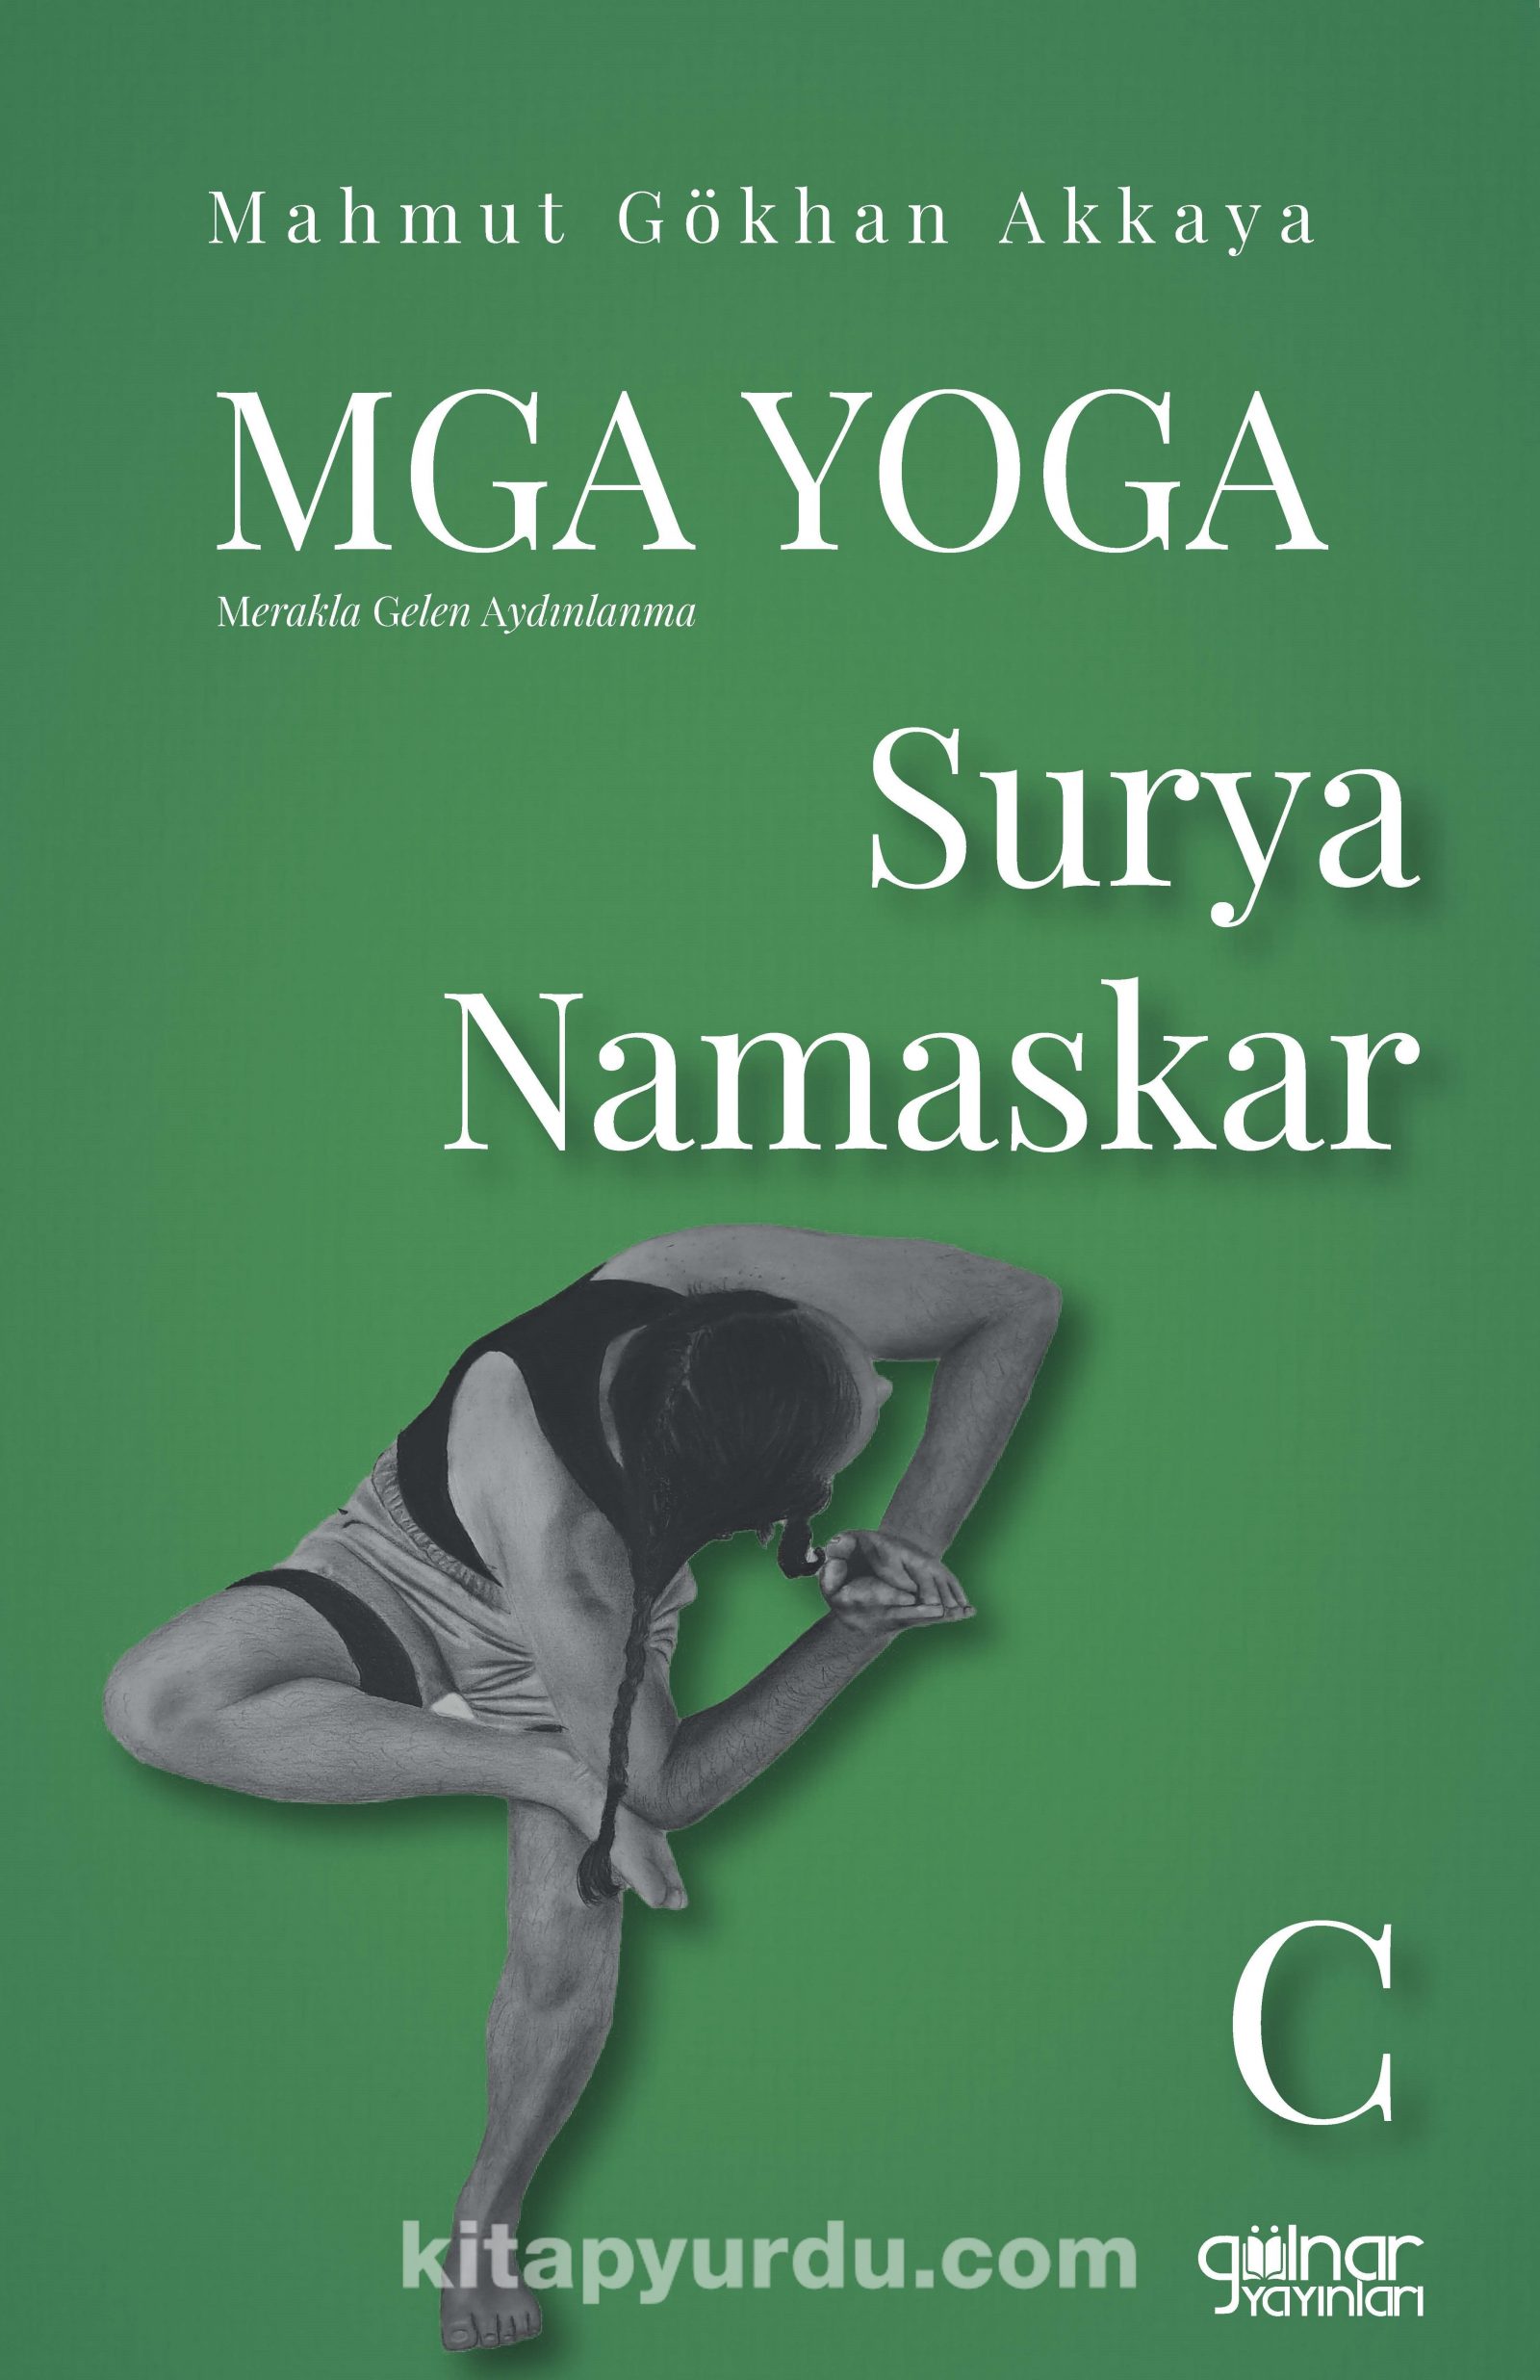 MGA Yoga Surya Namaskar C